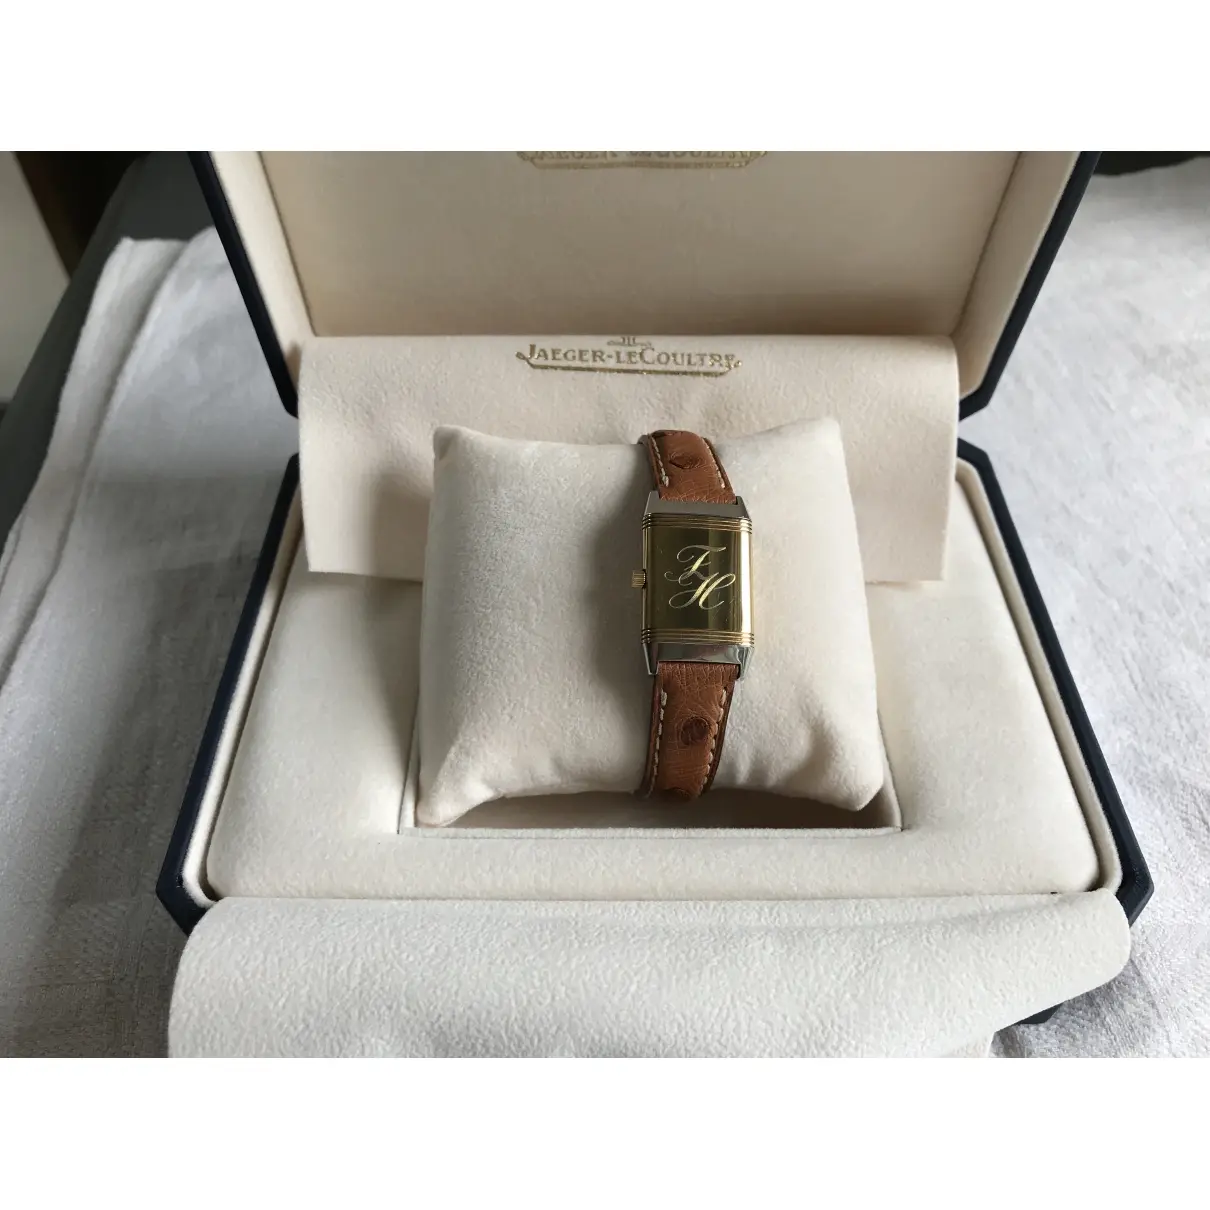 Buy Jaeger-Lecoultre Reverso watch online - Vintage